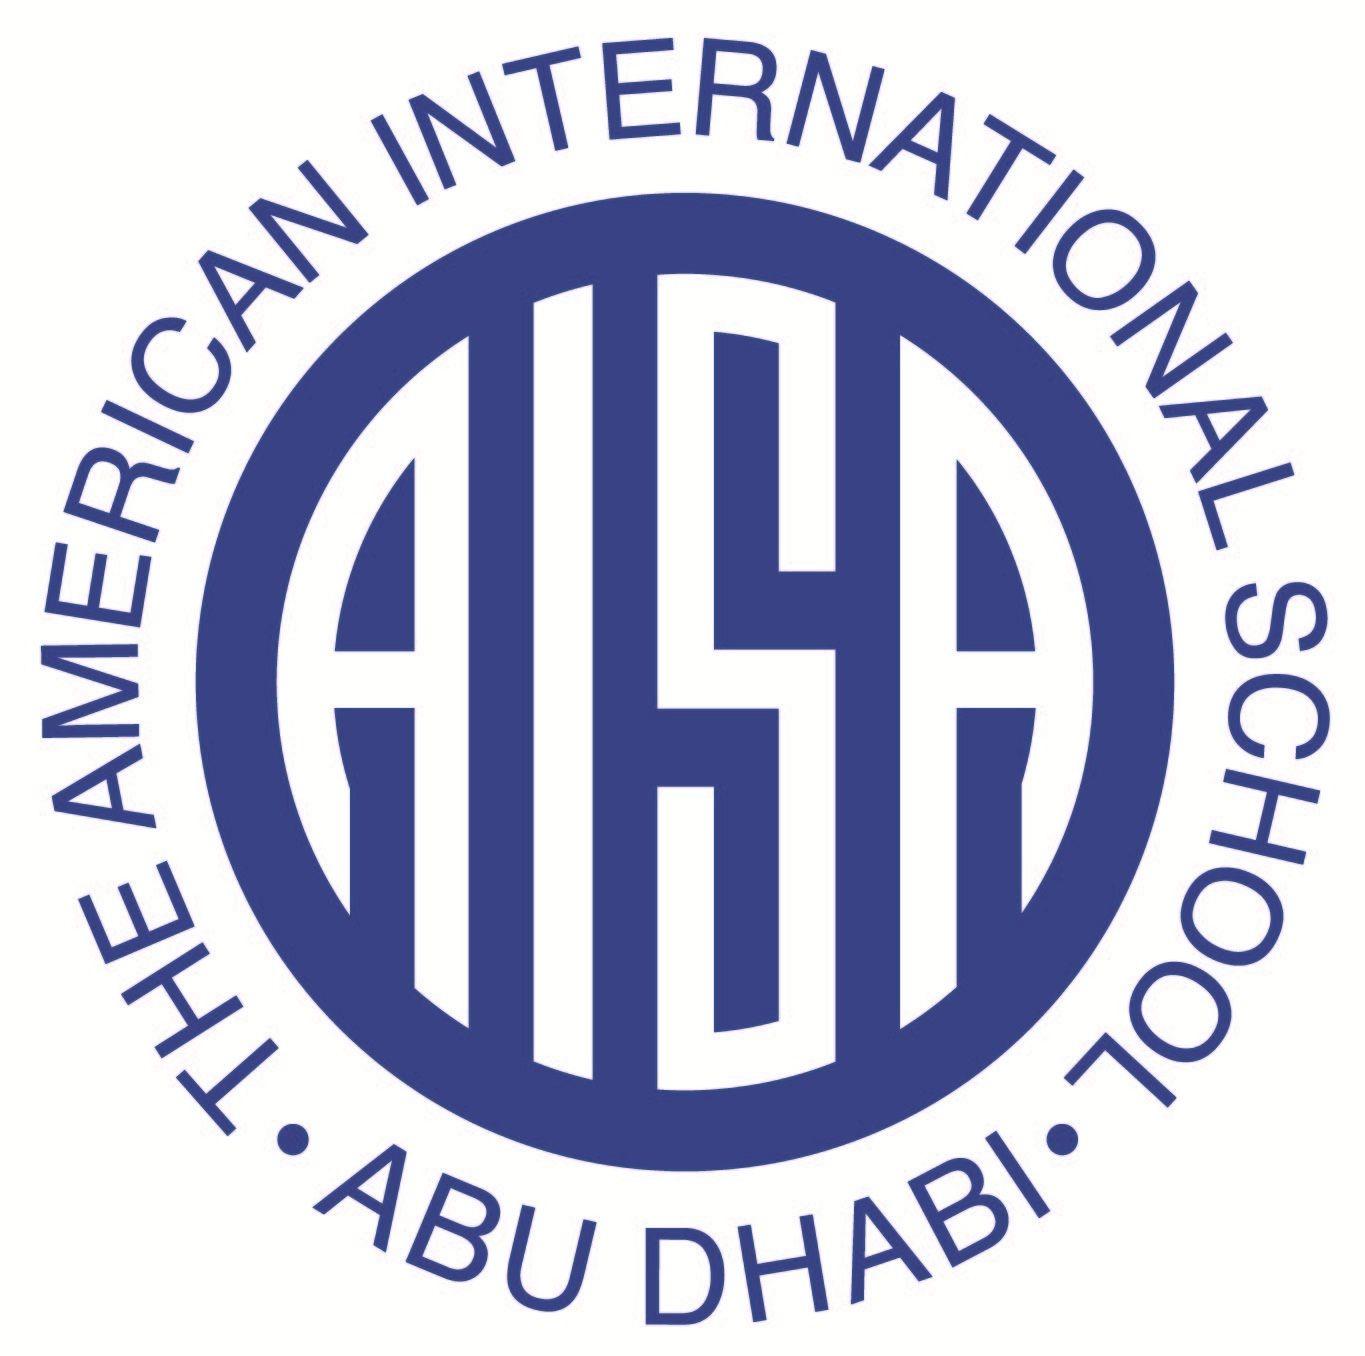 Aisa Logo - File:AISA logo.jpg - Wikimedia Commons